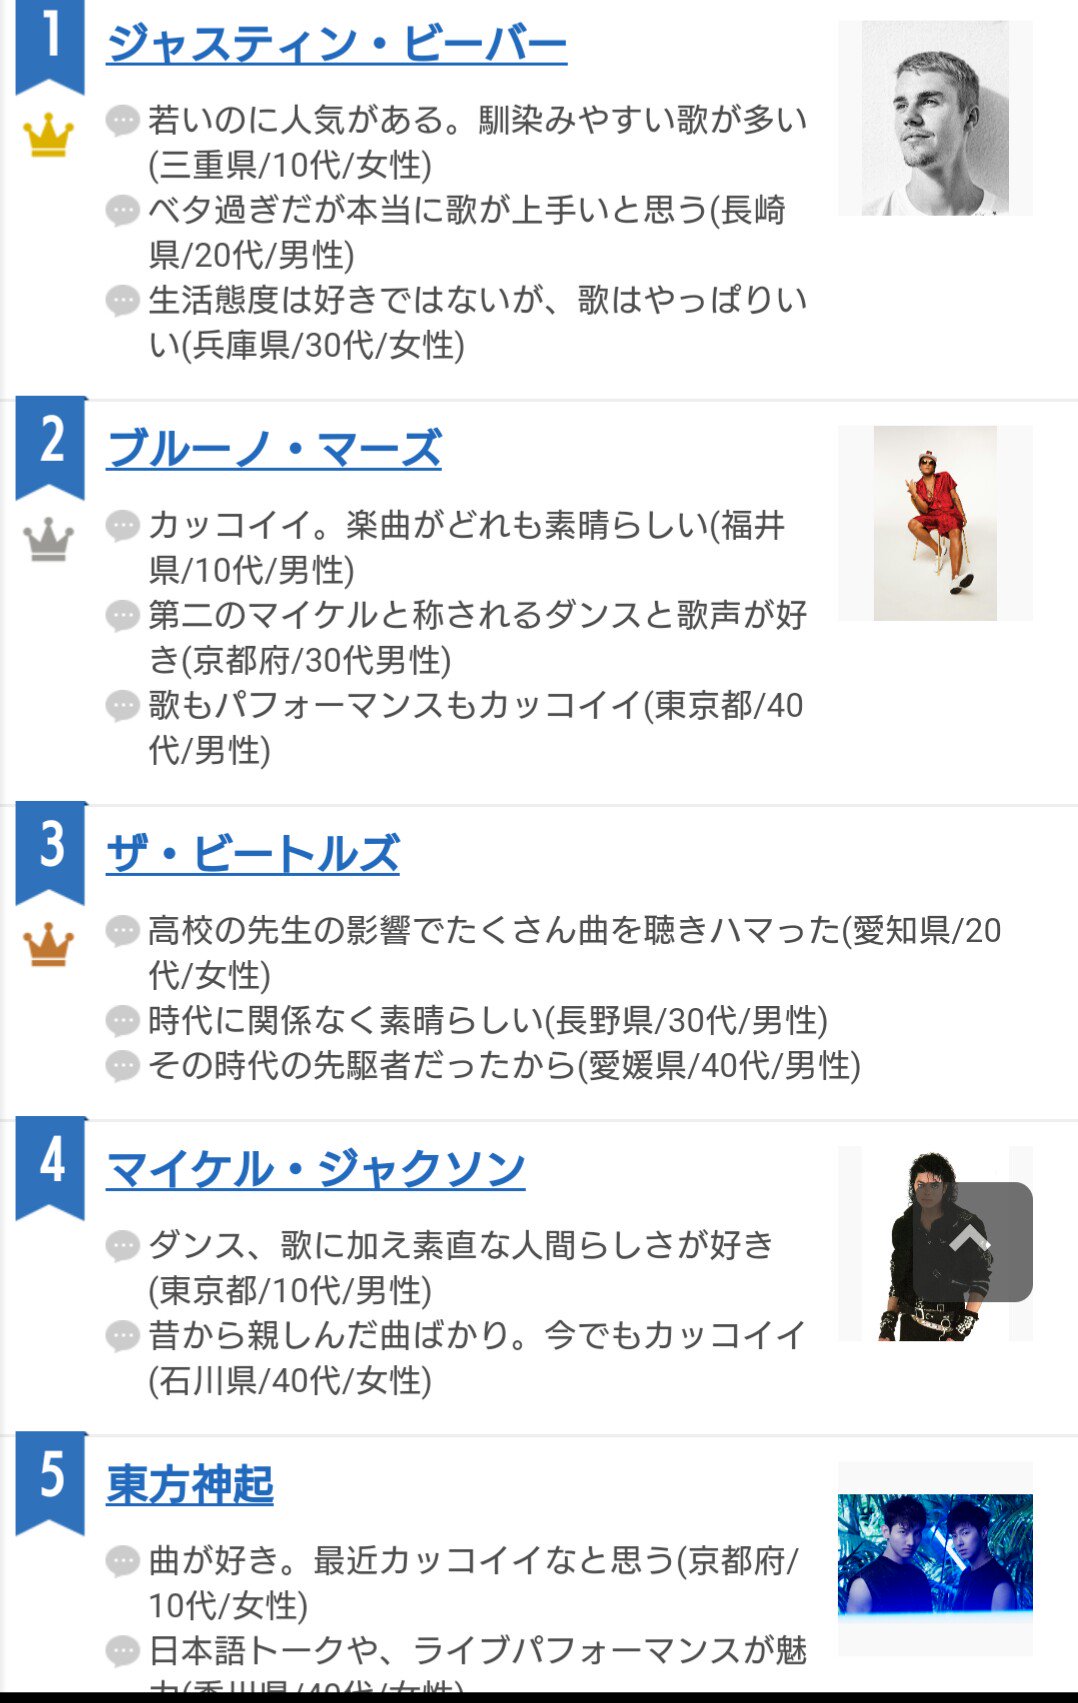 Ecochiro Oricon 好きな洋楽男性アーティスト ランキング 18 東方神起 15thanniversary T Co Aekvljoija Twitter